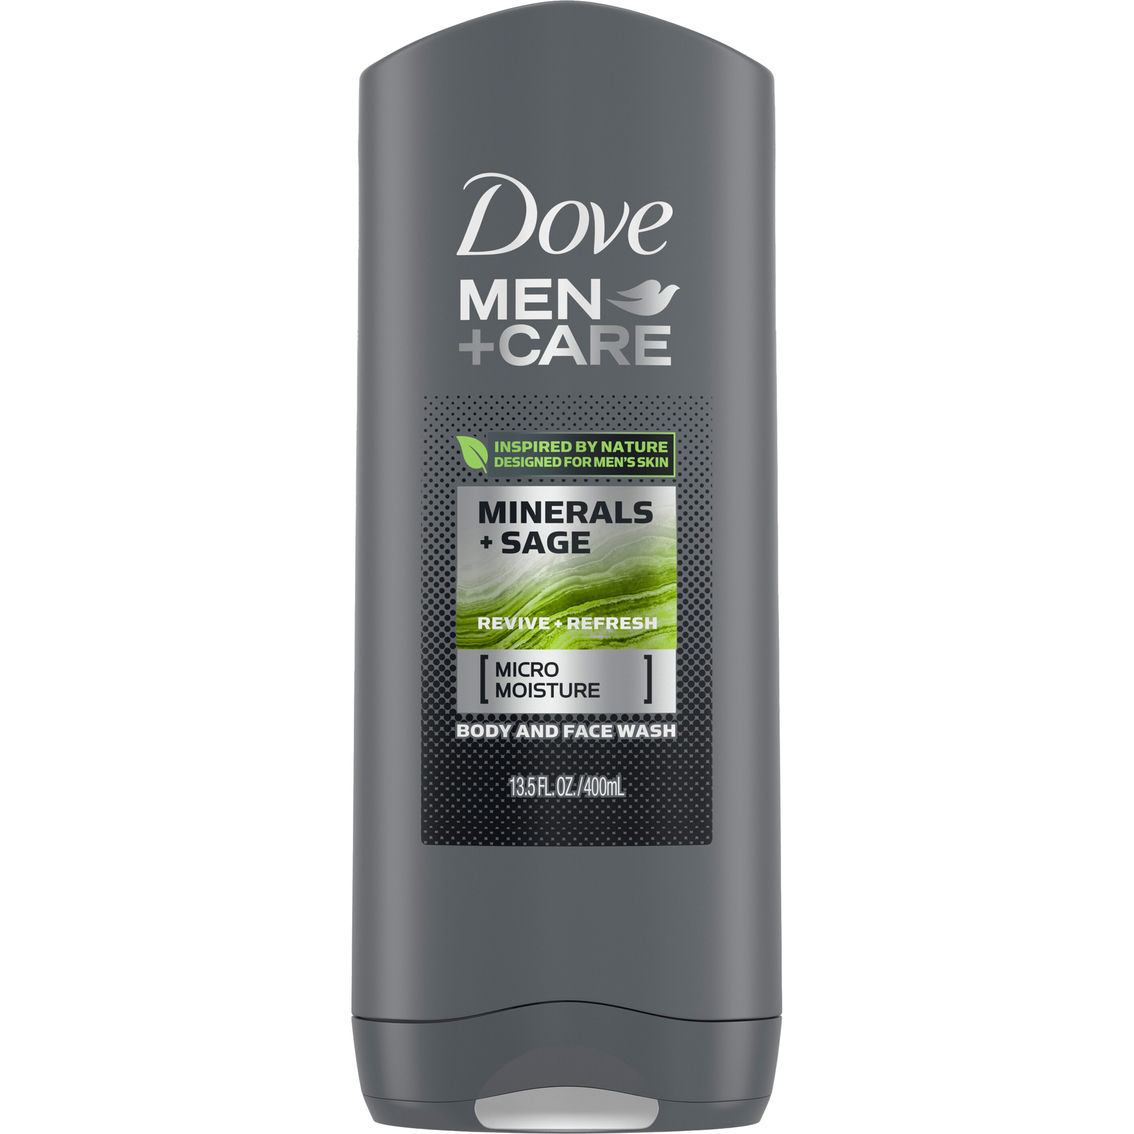 Dove Men + Care Elements Minerals and Sage Body Wash 13.5 oz.